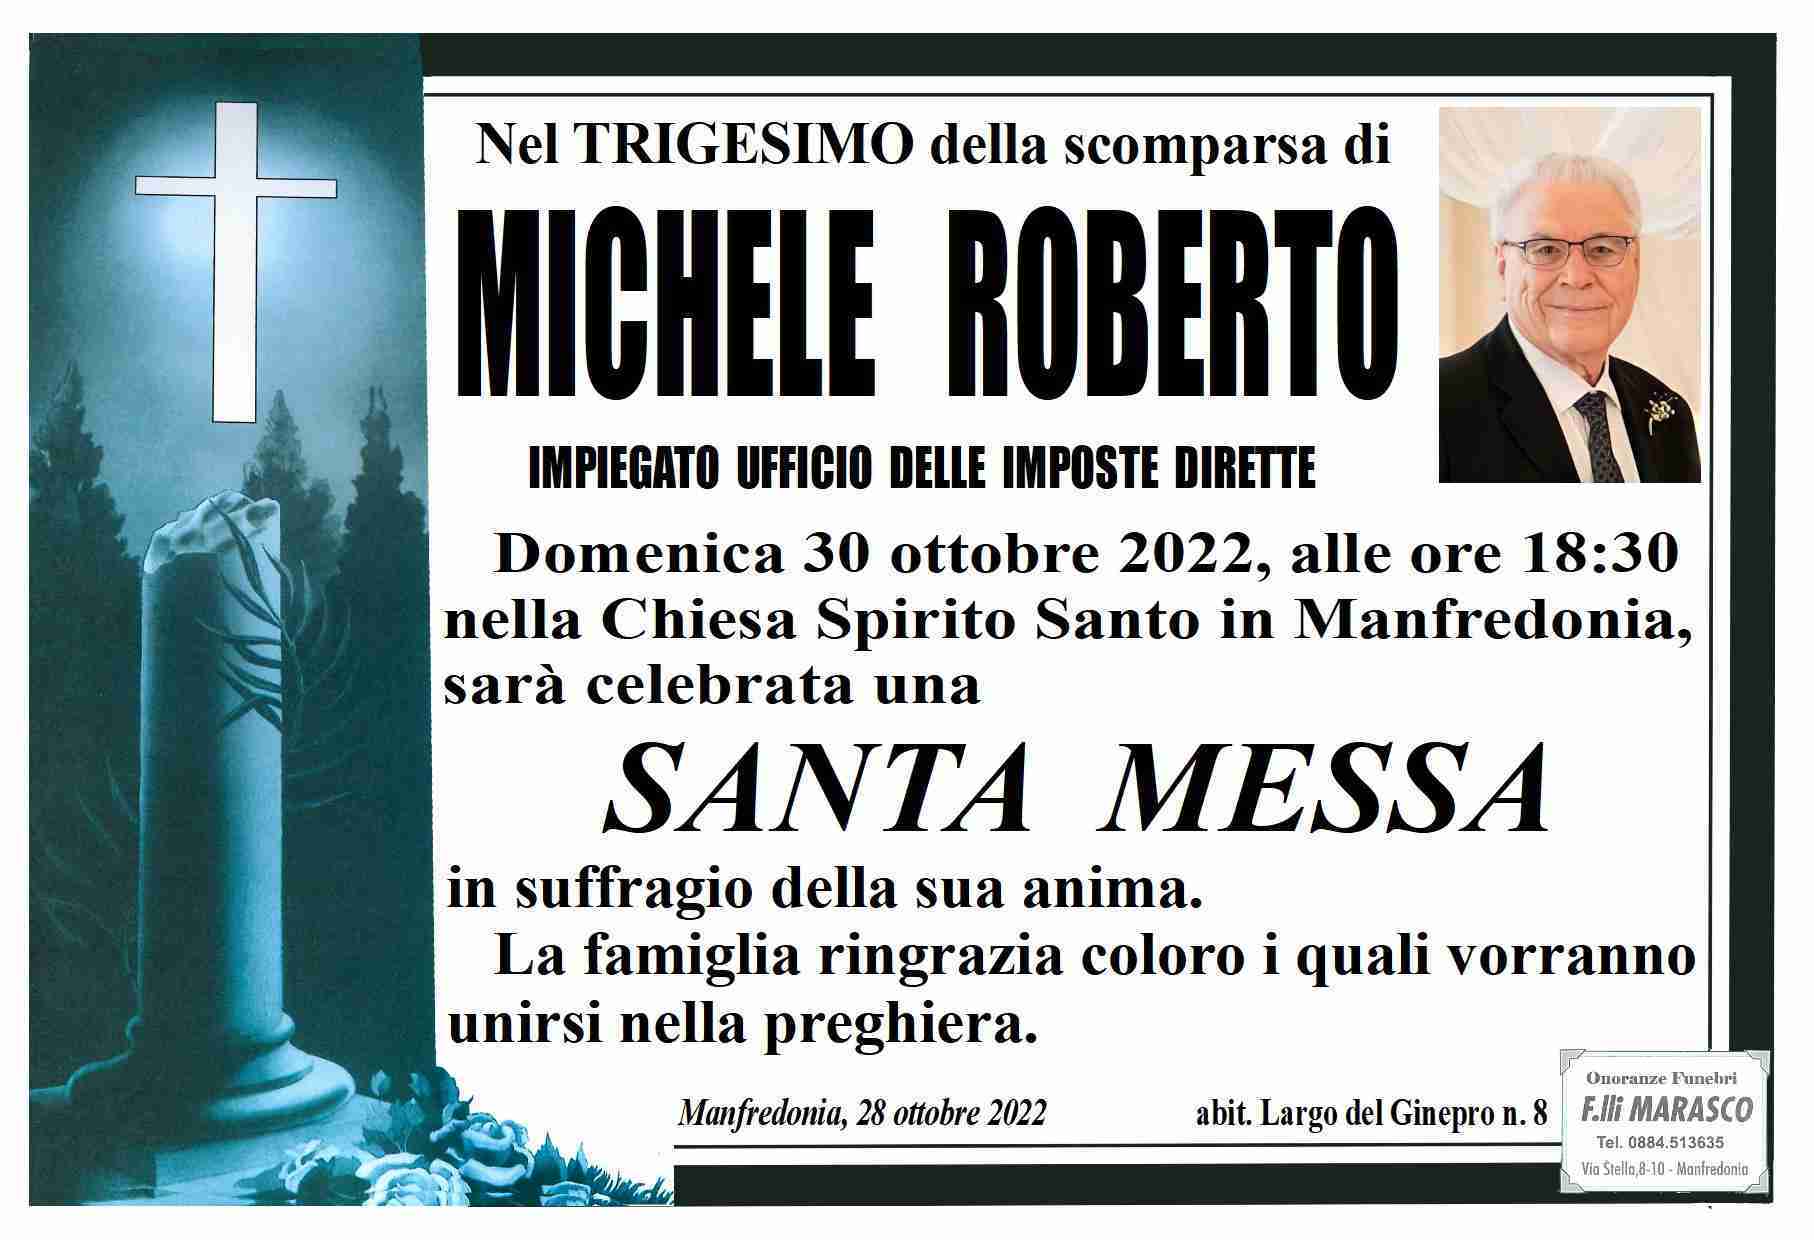 Michele Roberto